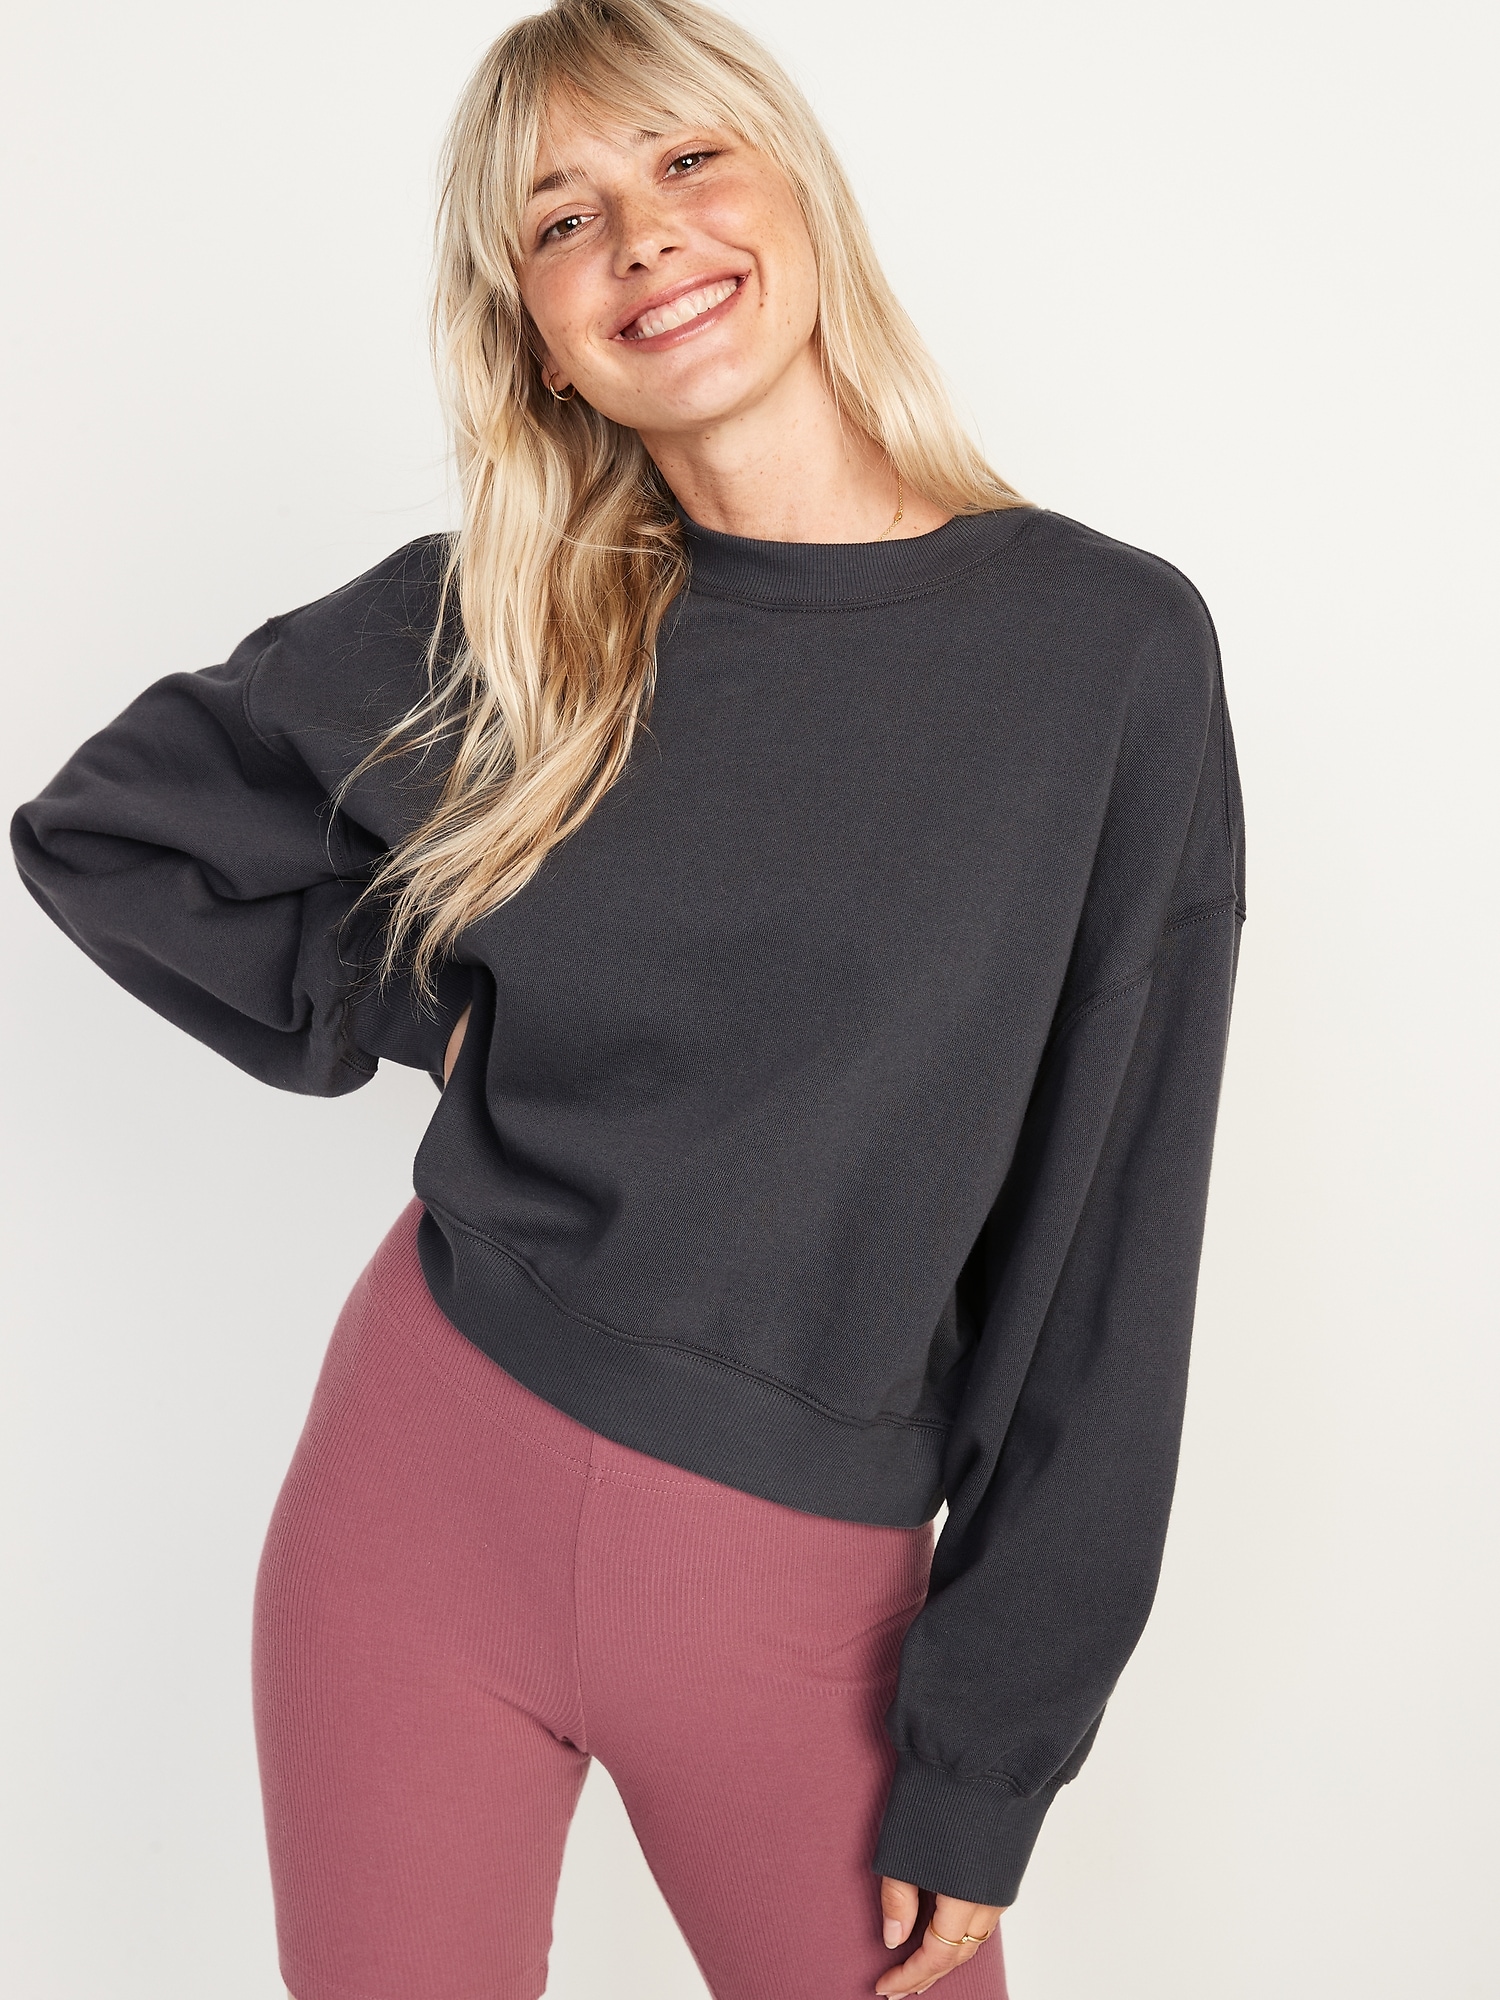 Oversized Long-Sleeve Sweatshirt for Women | Old Navy